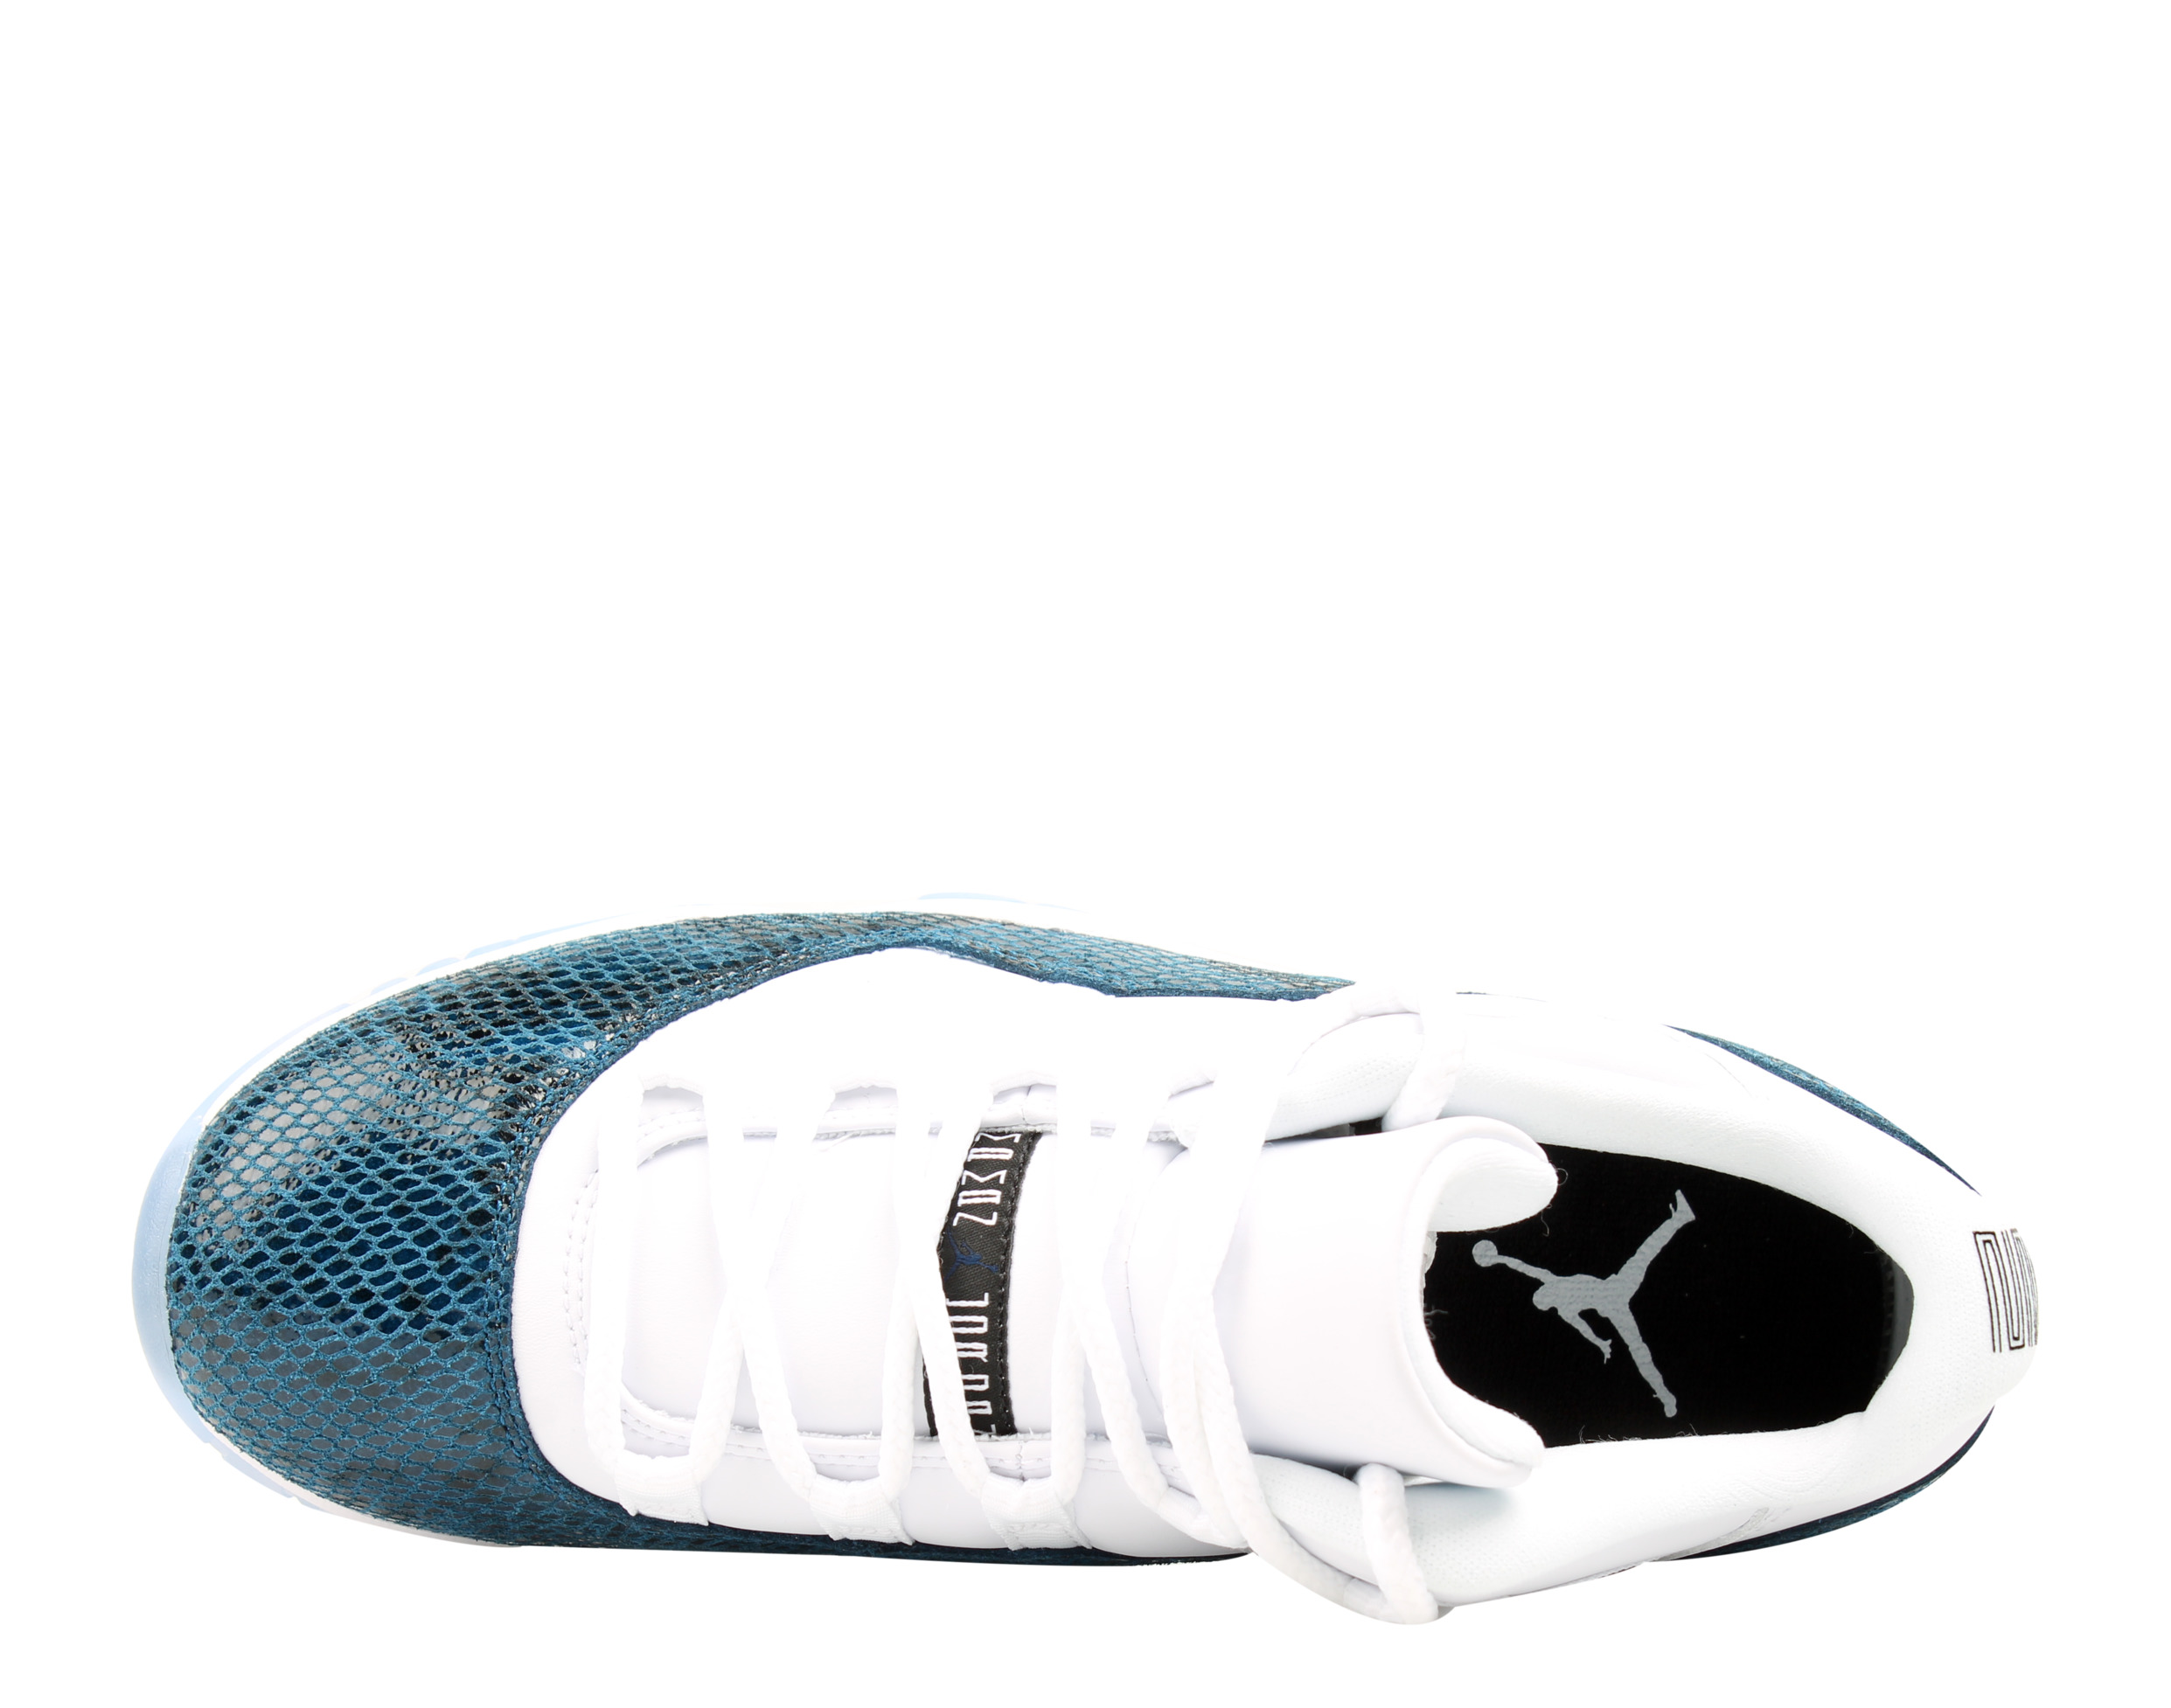 Nike Air Jordan 11 Retro Low LE Men's Basketball Shoes Size 10 - image 4 of 6